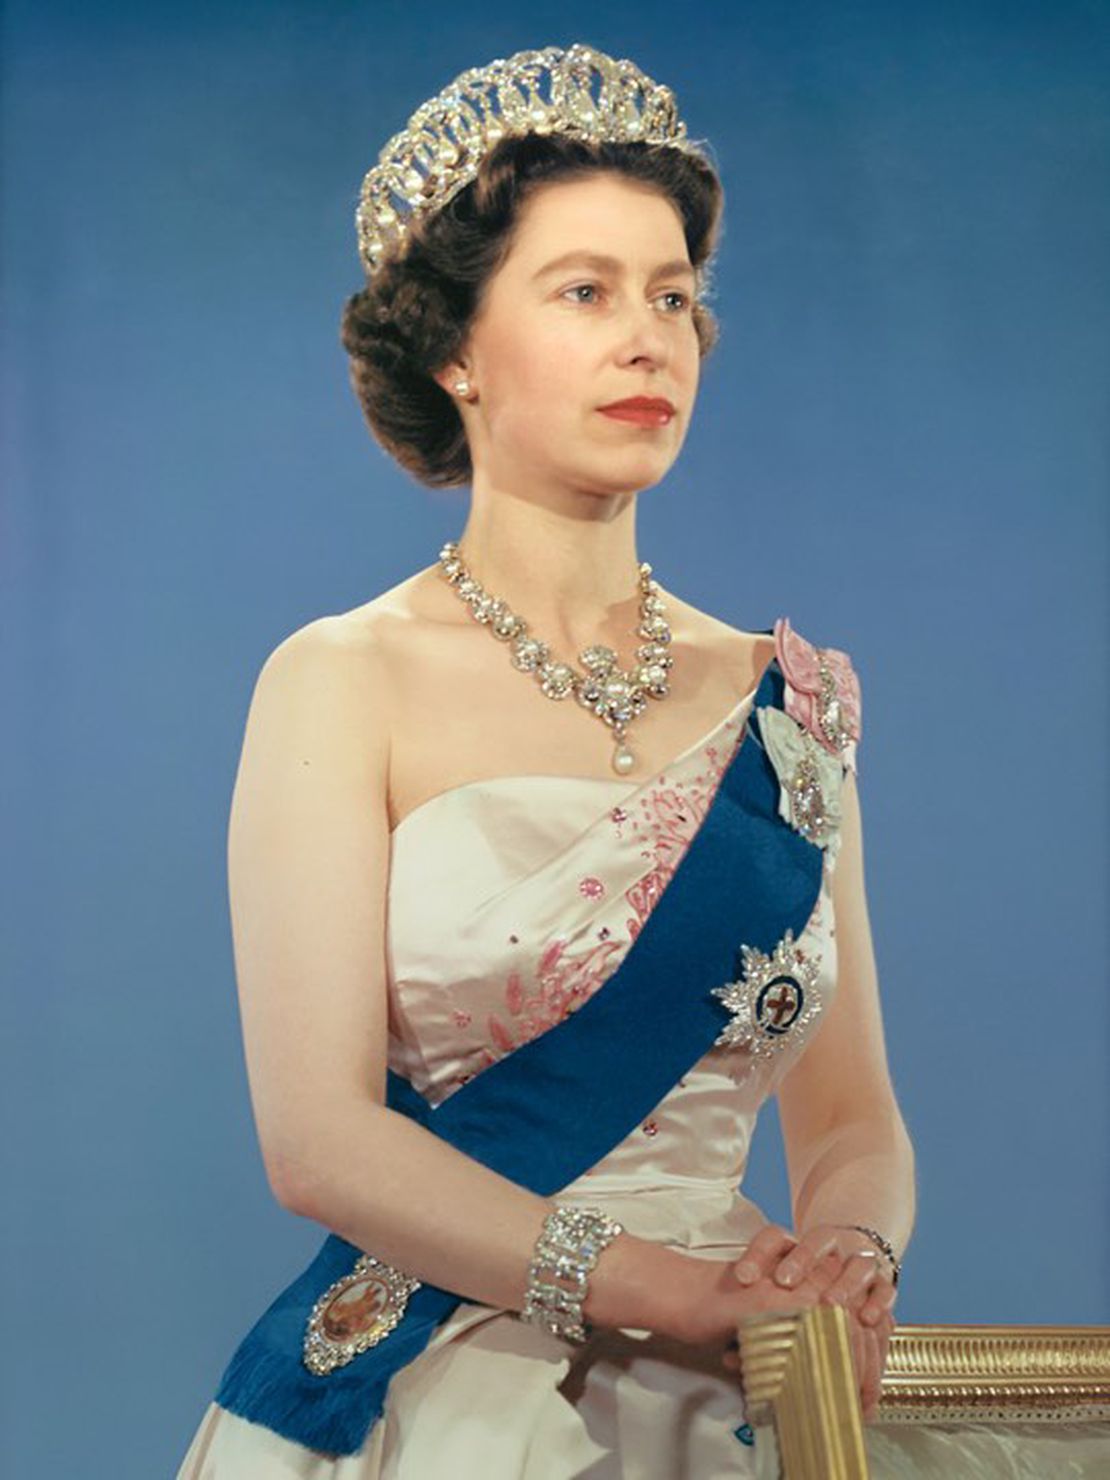 The future Queen Elizabeth II born